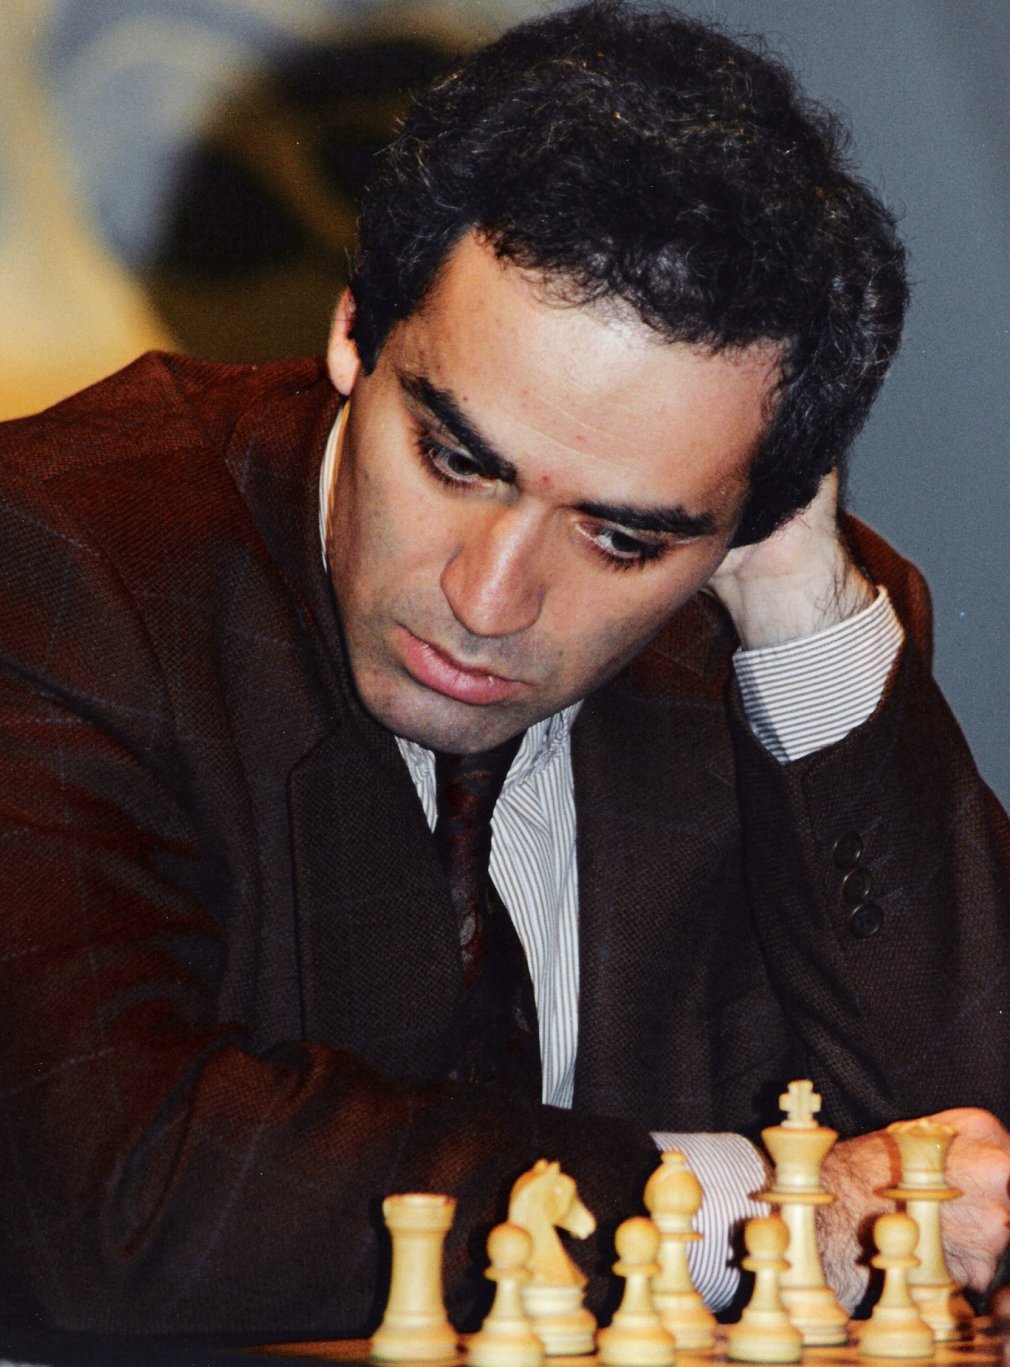 Chess grandmasters Gary Kasparov and Anatoly Karpov to meet again